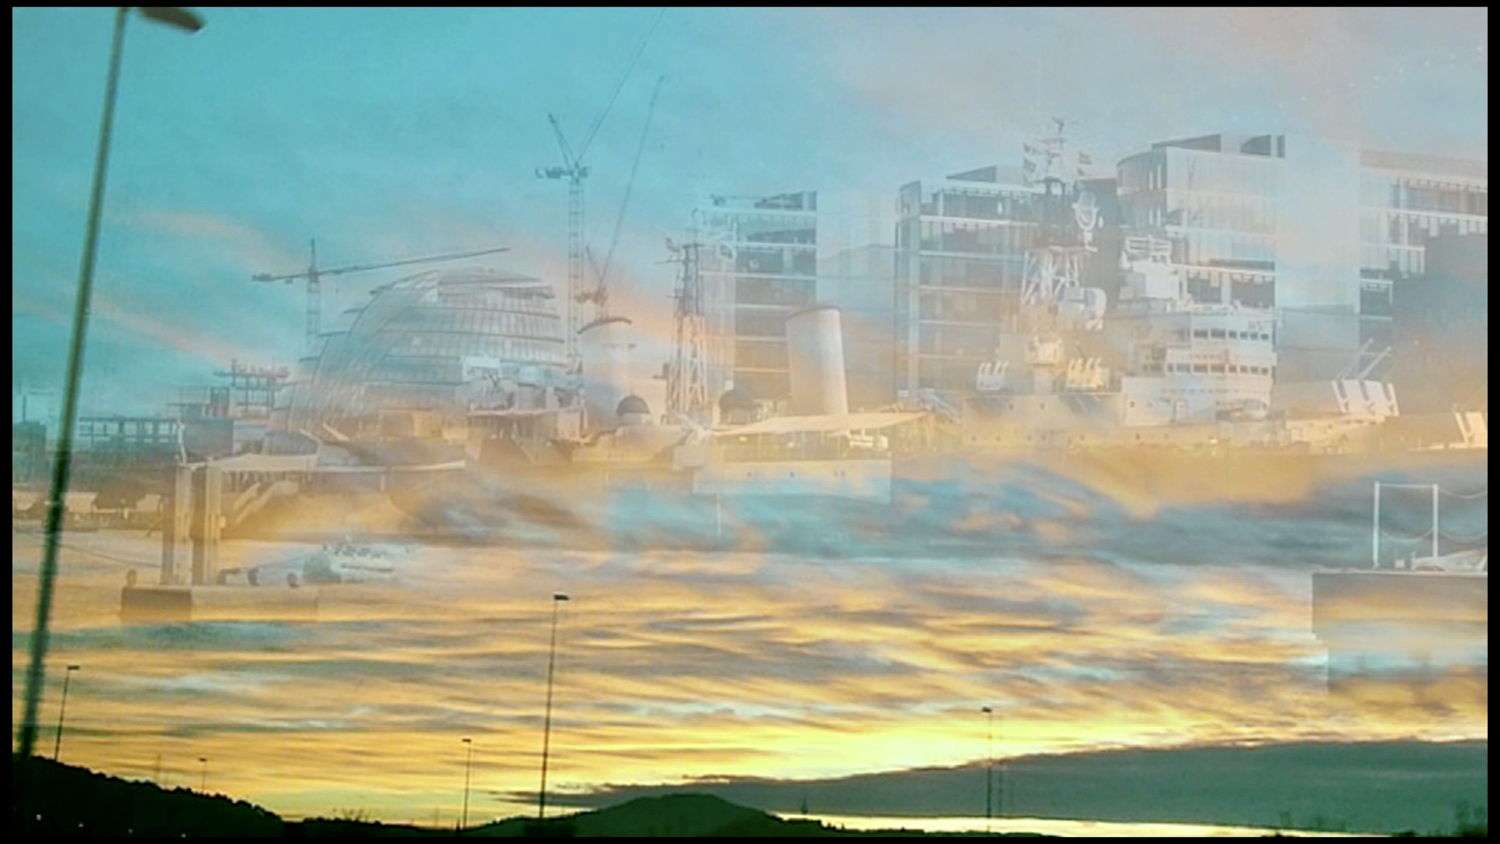 TAMARA LAI, Image extraite du Road movie expérimental 'Gaps', 2014